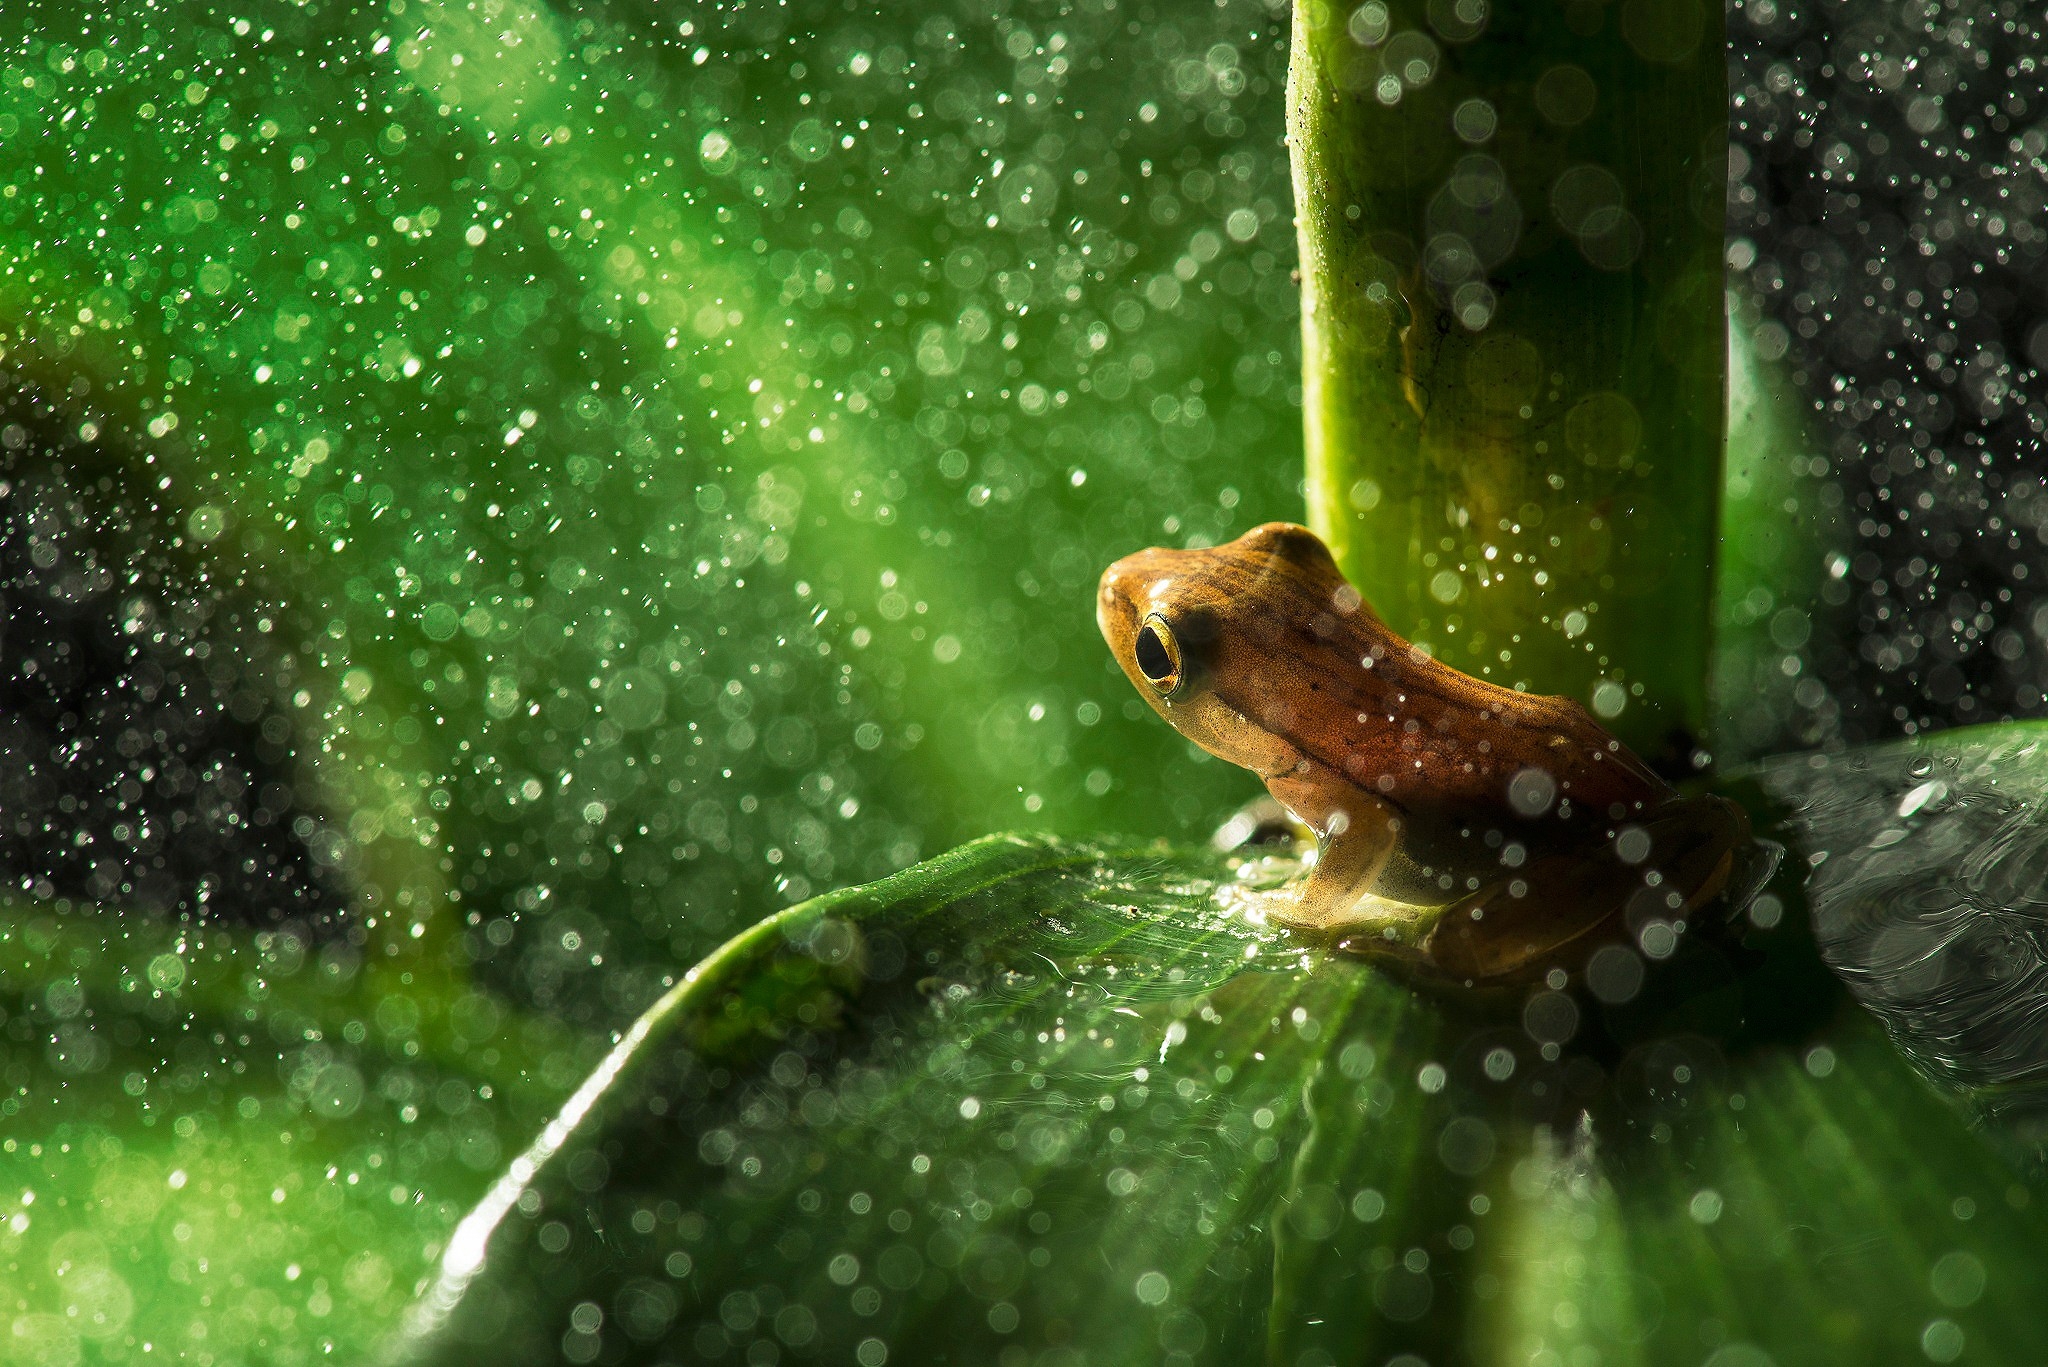 Фото обои лягушка, размытый фон, лист, природа - бесплатные картинки на Fonwall